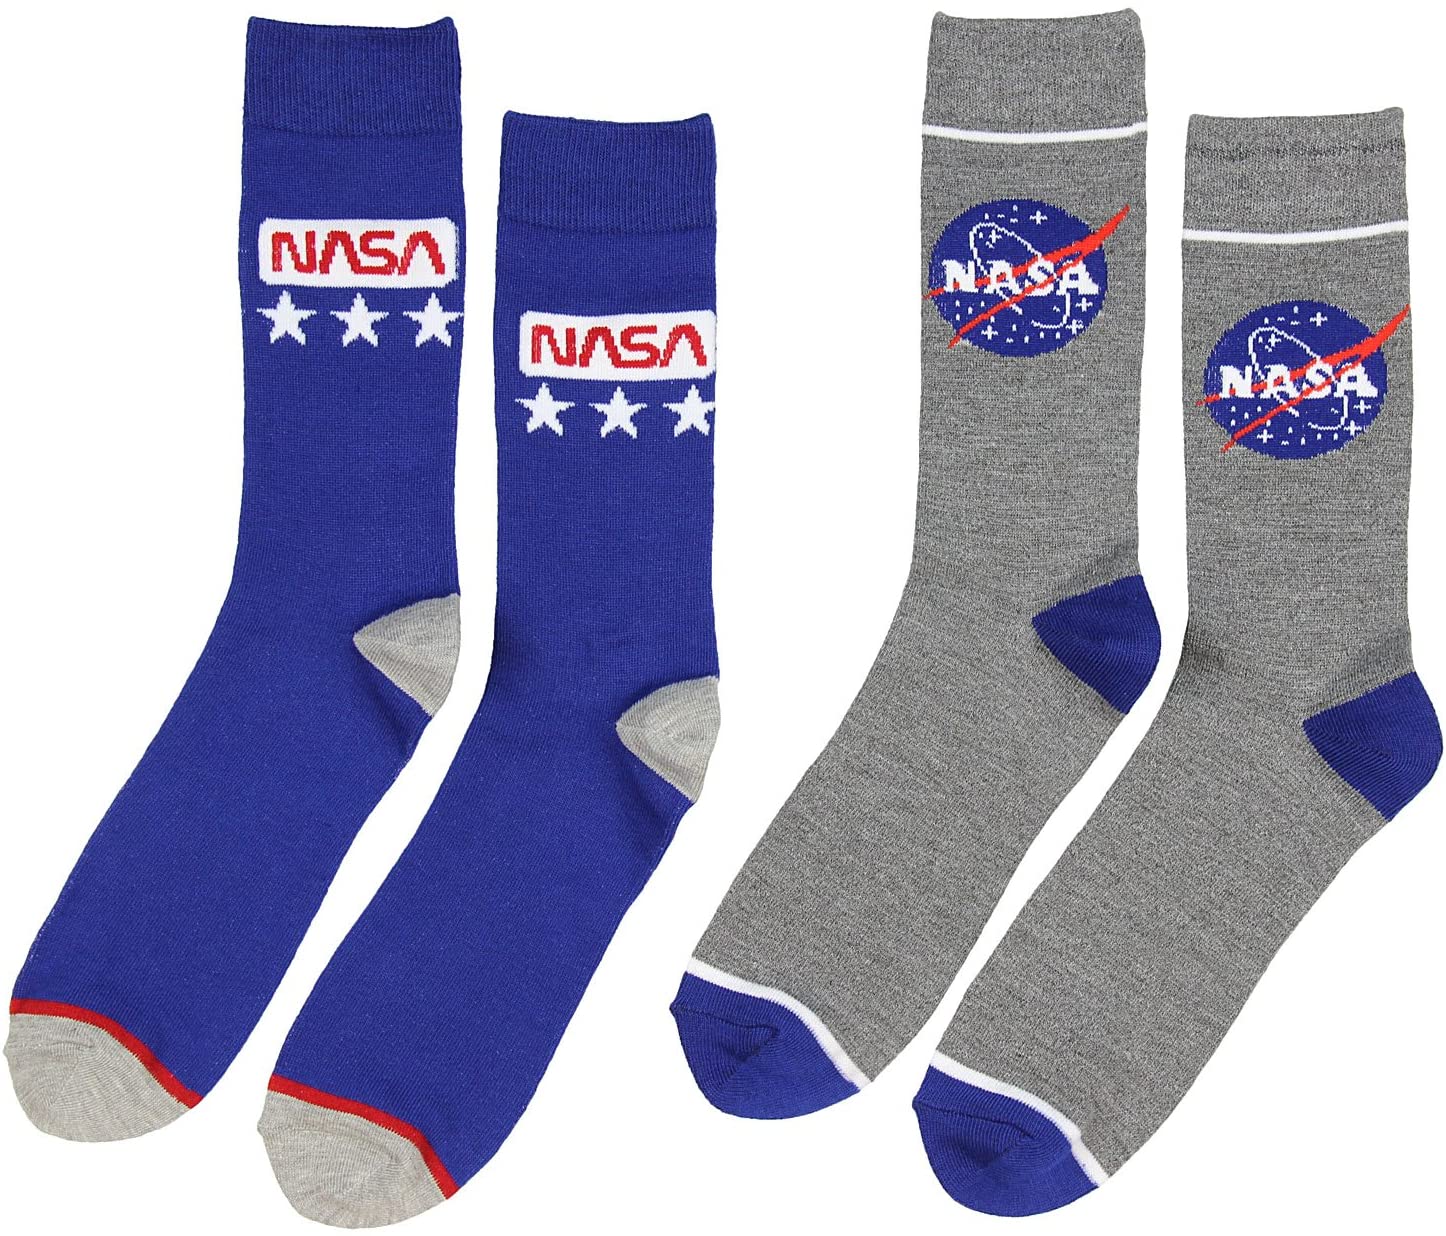 Bioworld Buzz Aldrin NASA Logo Crew Calf High Socks (2 pairs)